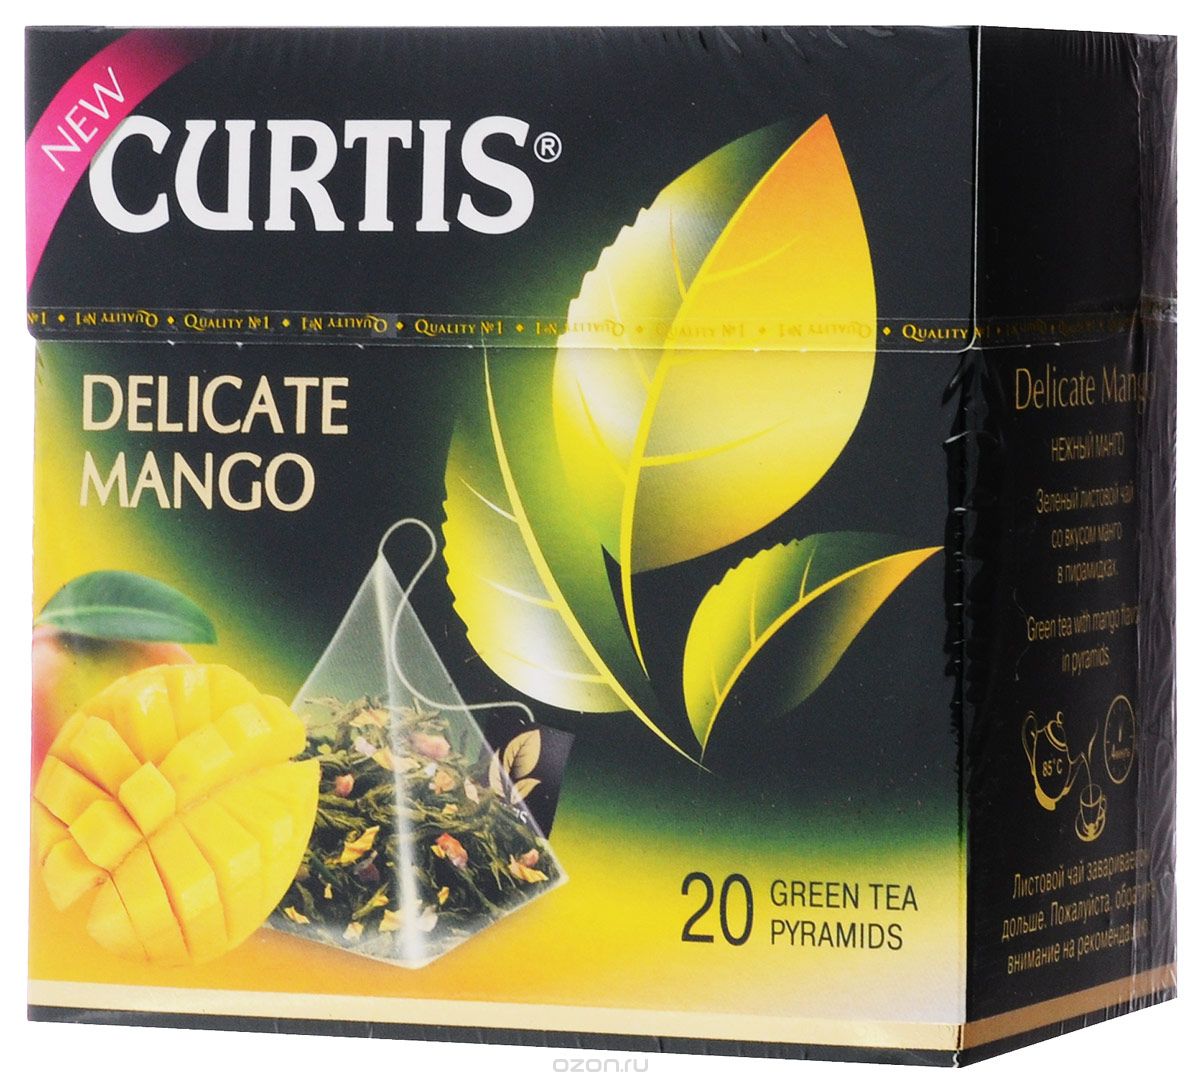 Curtis Delicate Mango    , 20 